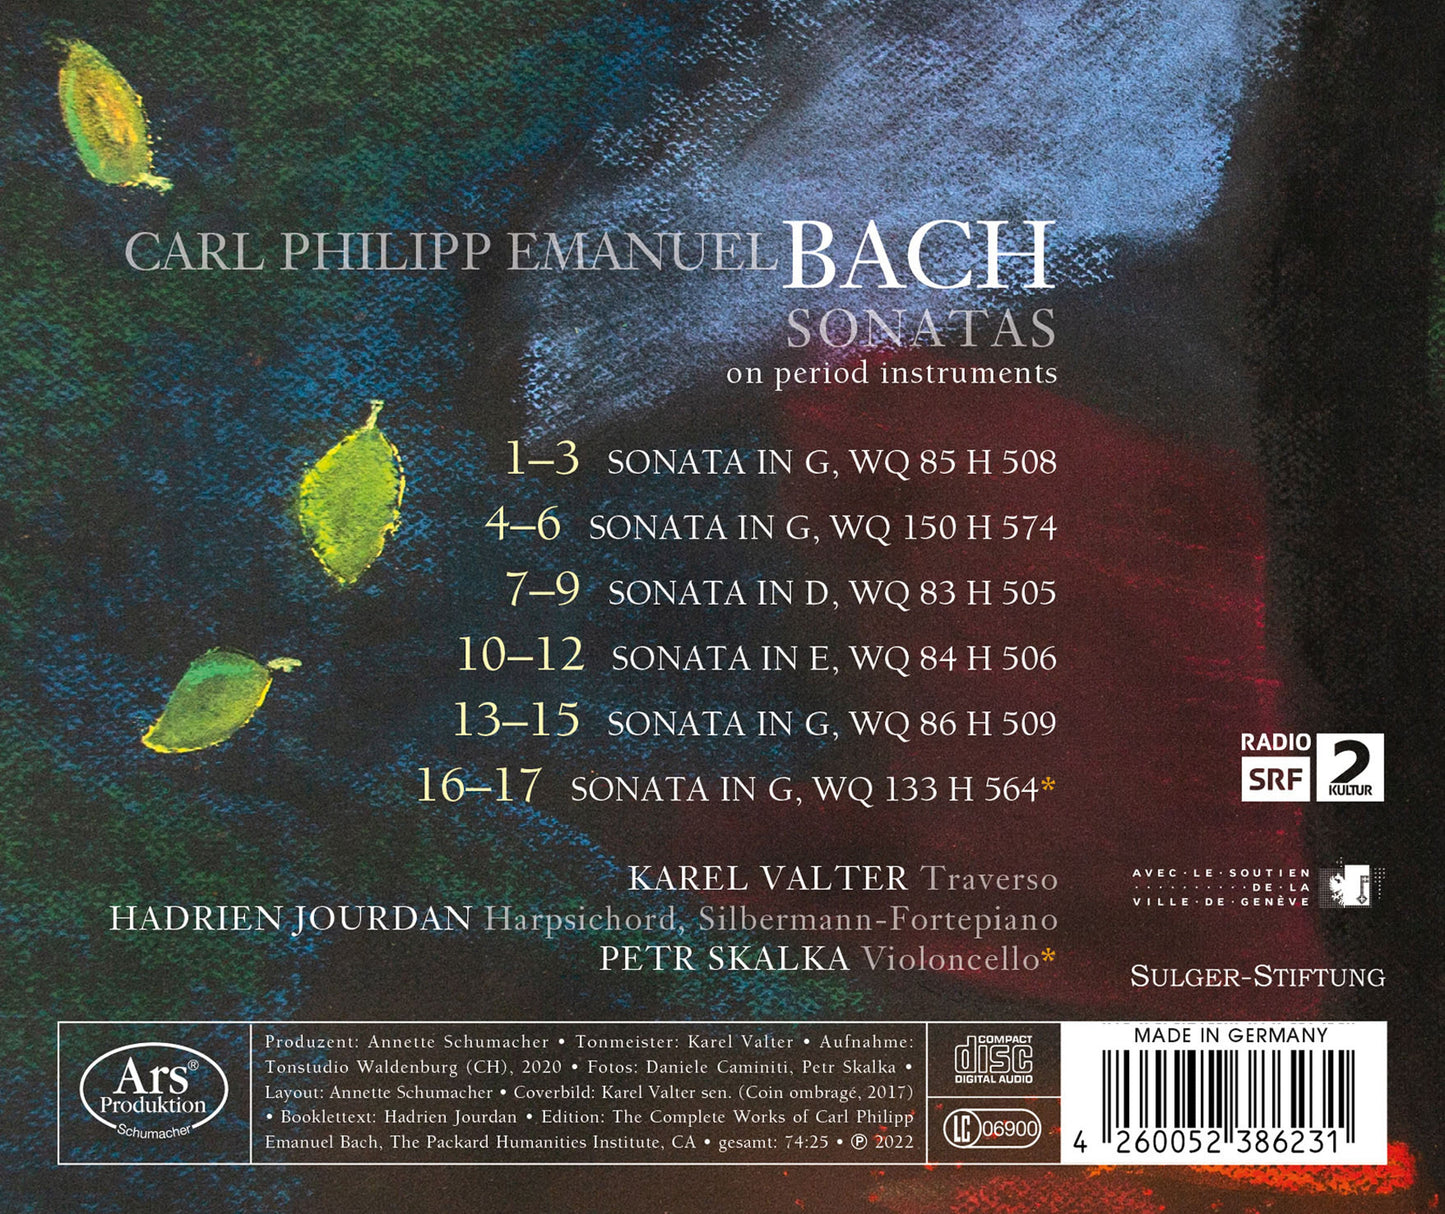 C.P.E. Bach: Sonatas For Traverso & Clavier